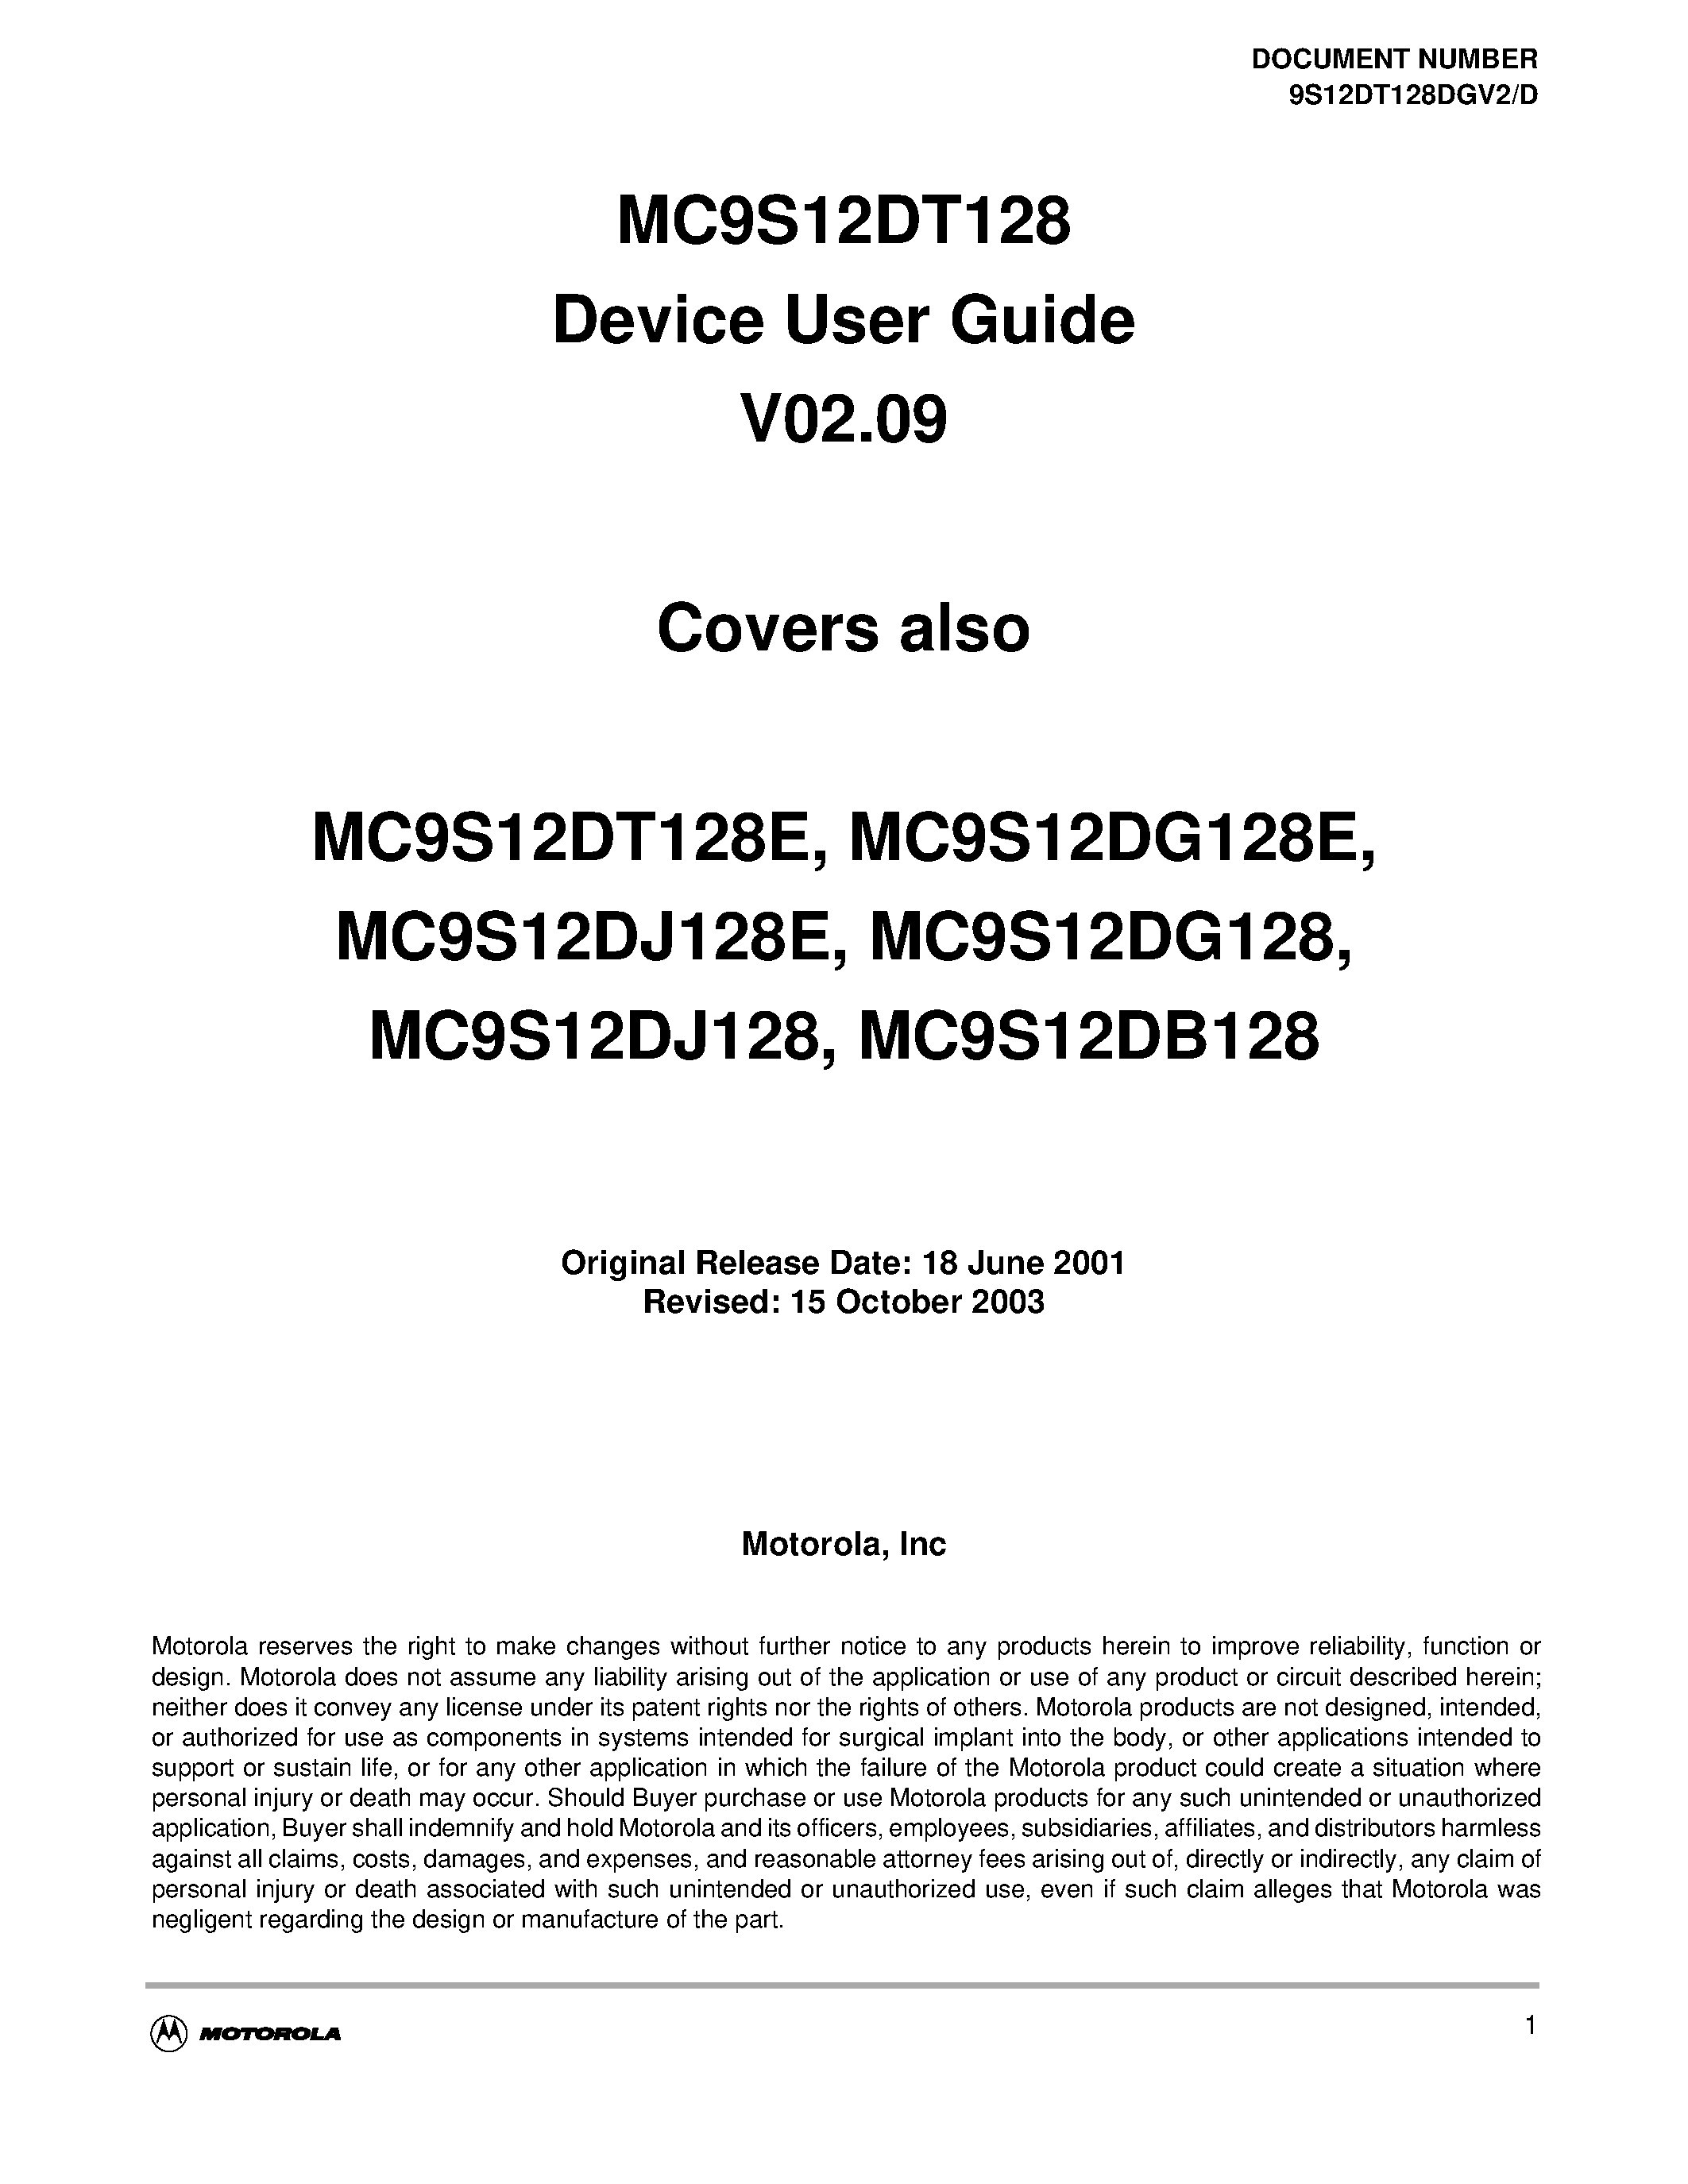 Даташит S12PWM8B8CV1 - MC9S12DT128 Device User Guide V02.09 страница 1